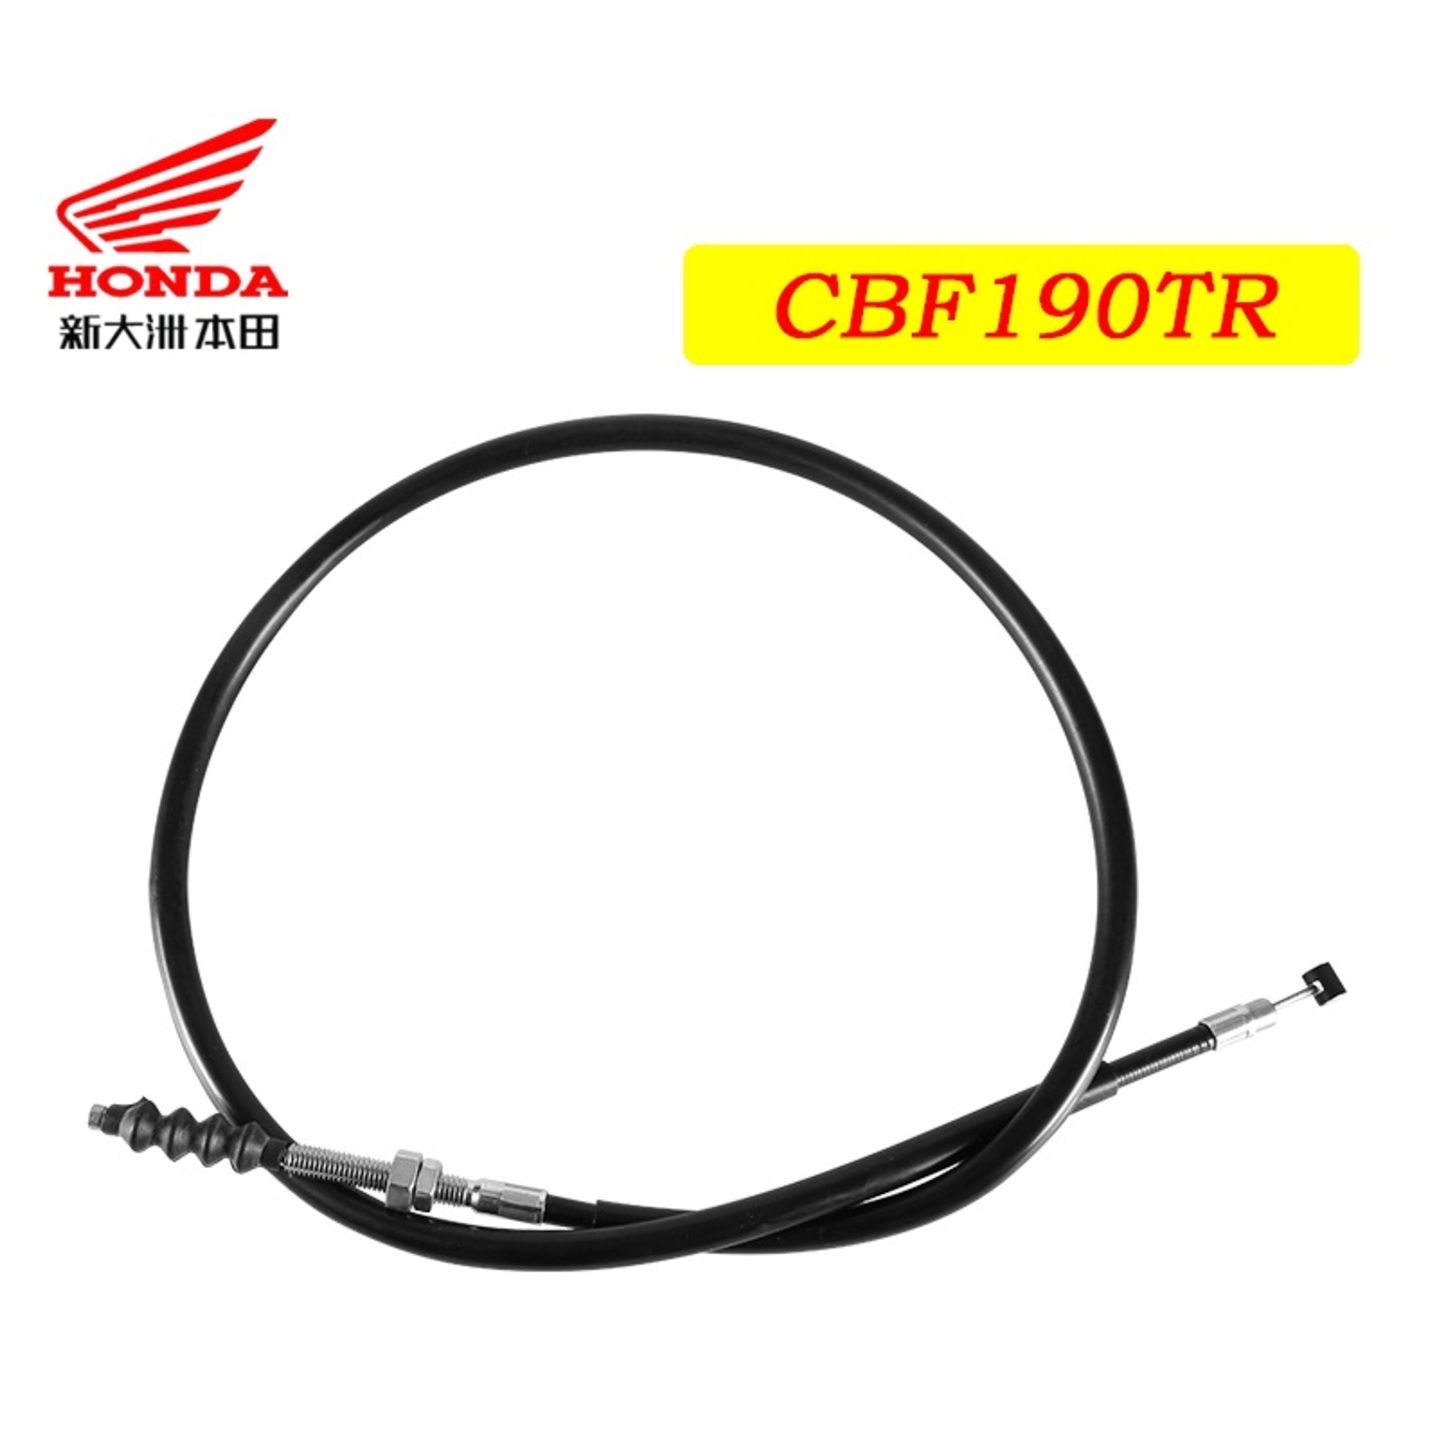 Honda CBF190TR clutch cable